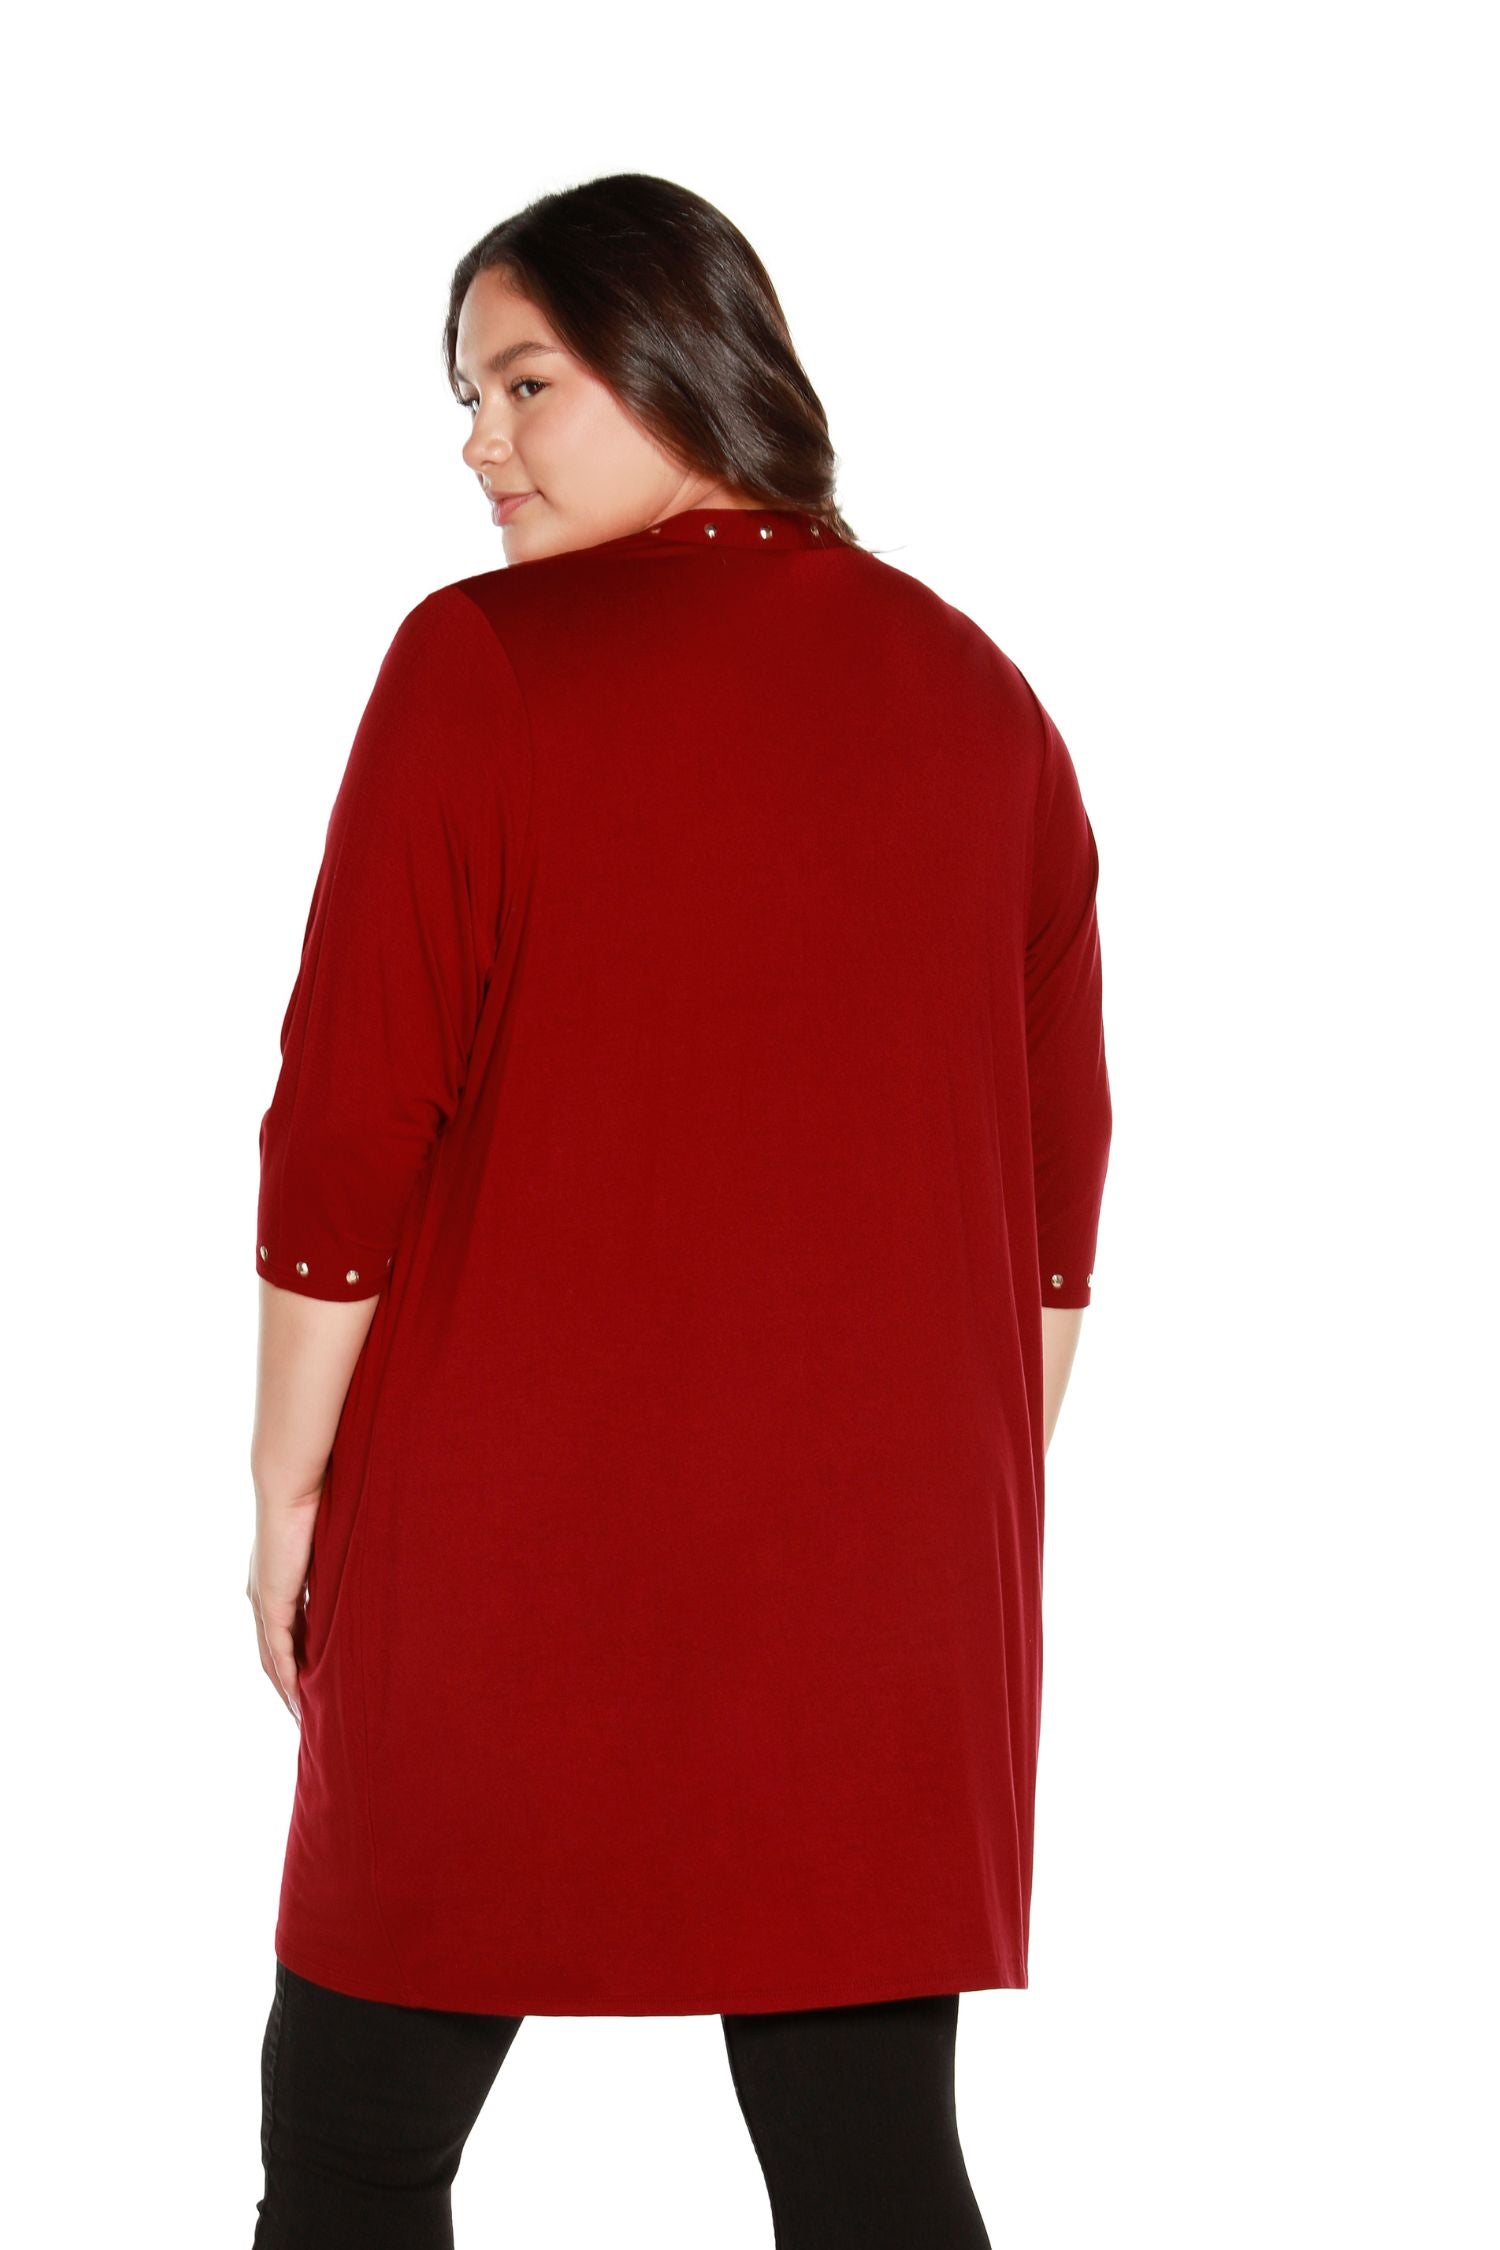 Women's Plus Size 3/4 Sleeve Cardigan with Rhinestuds | Curvy